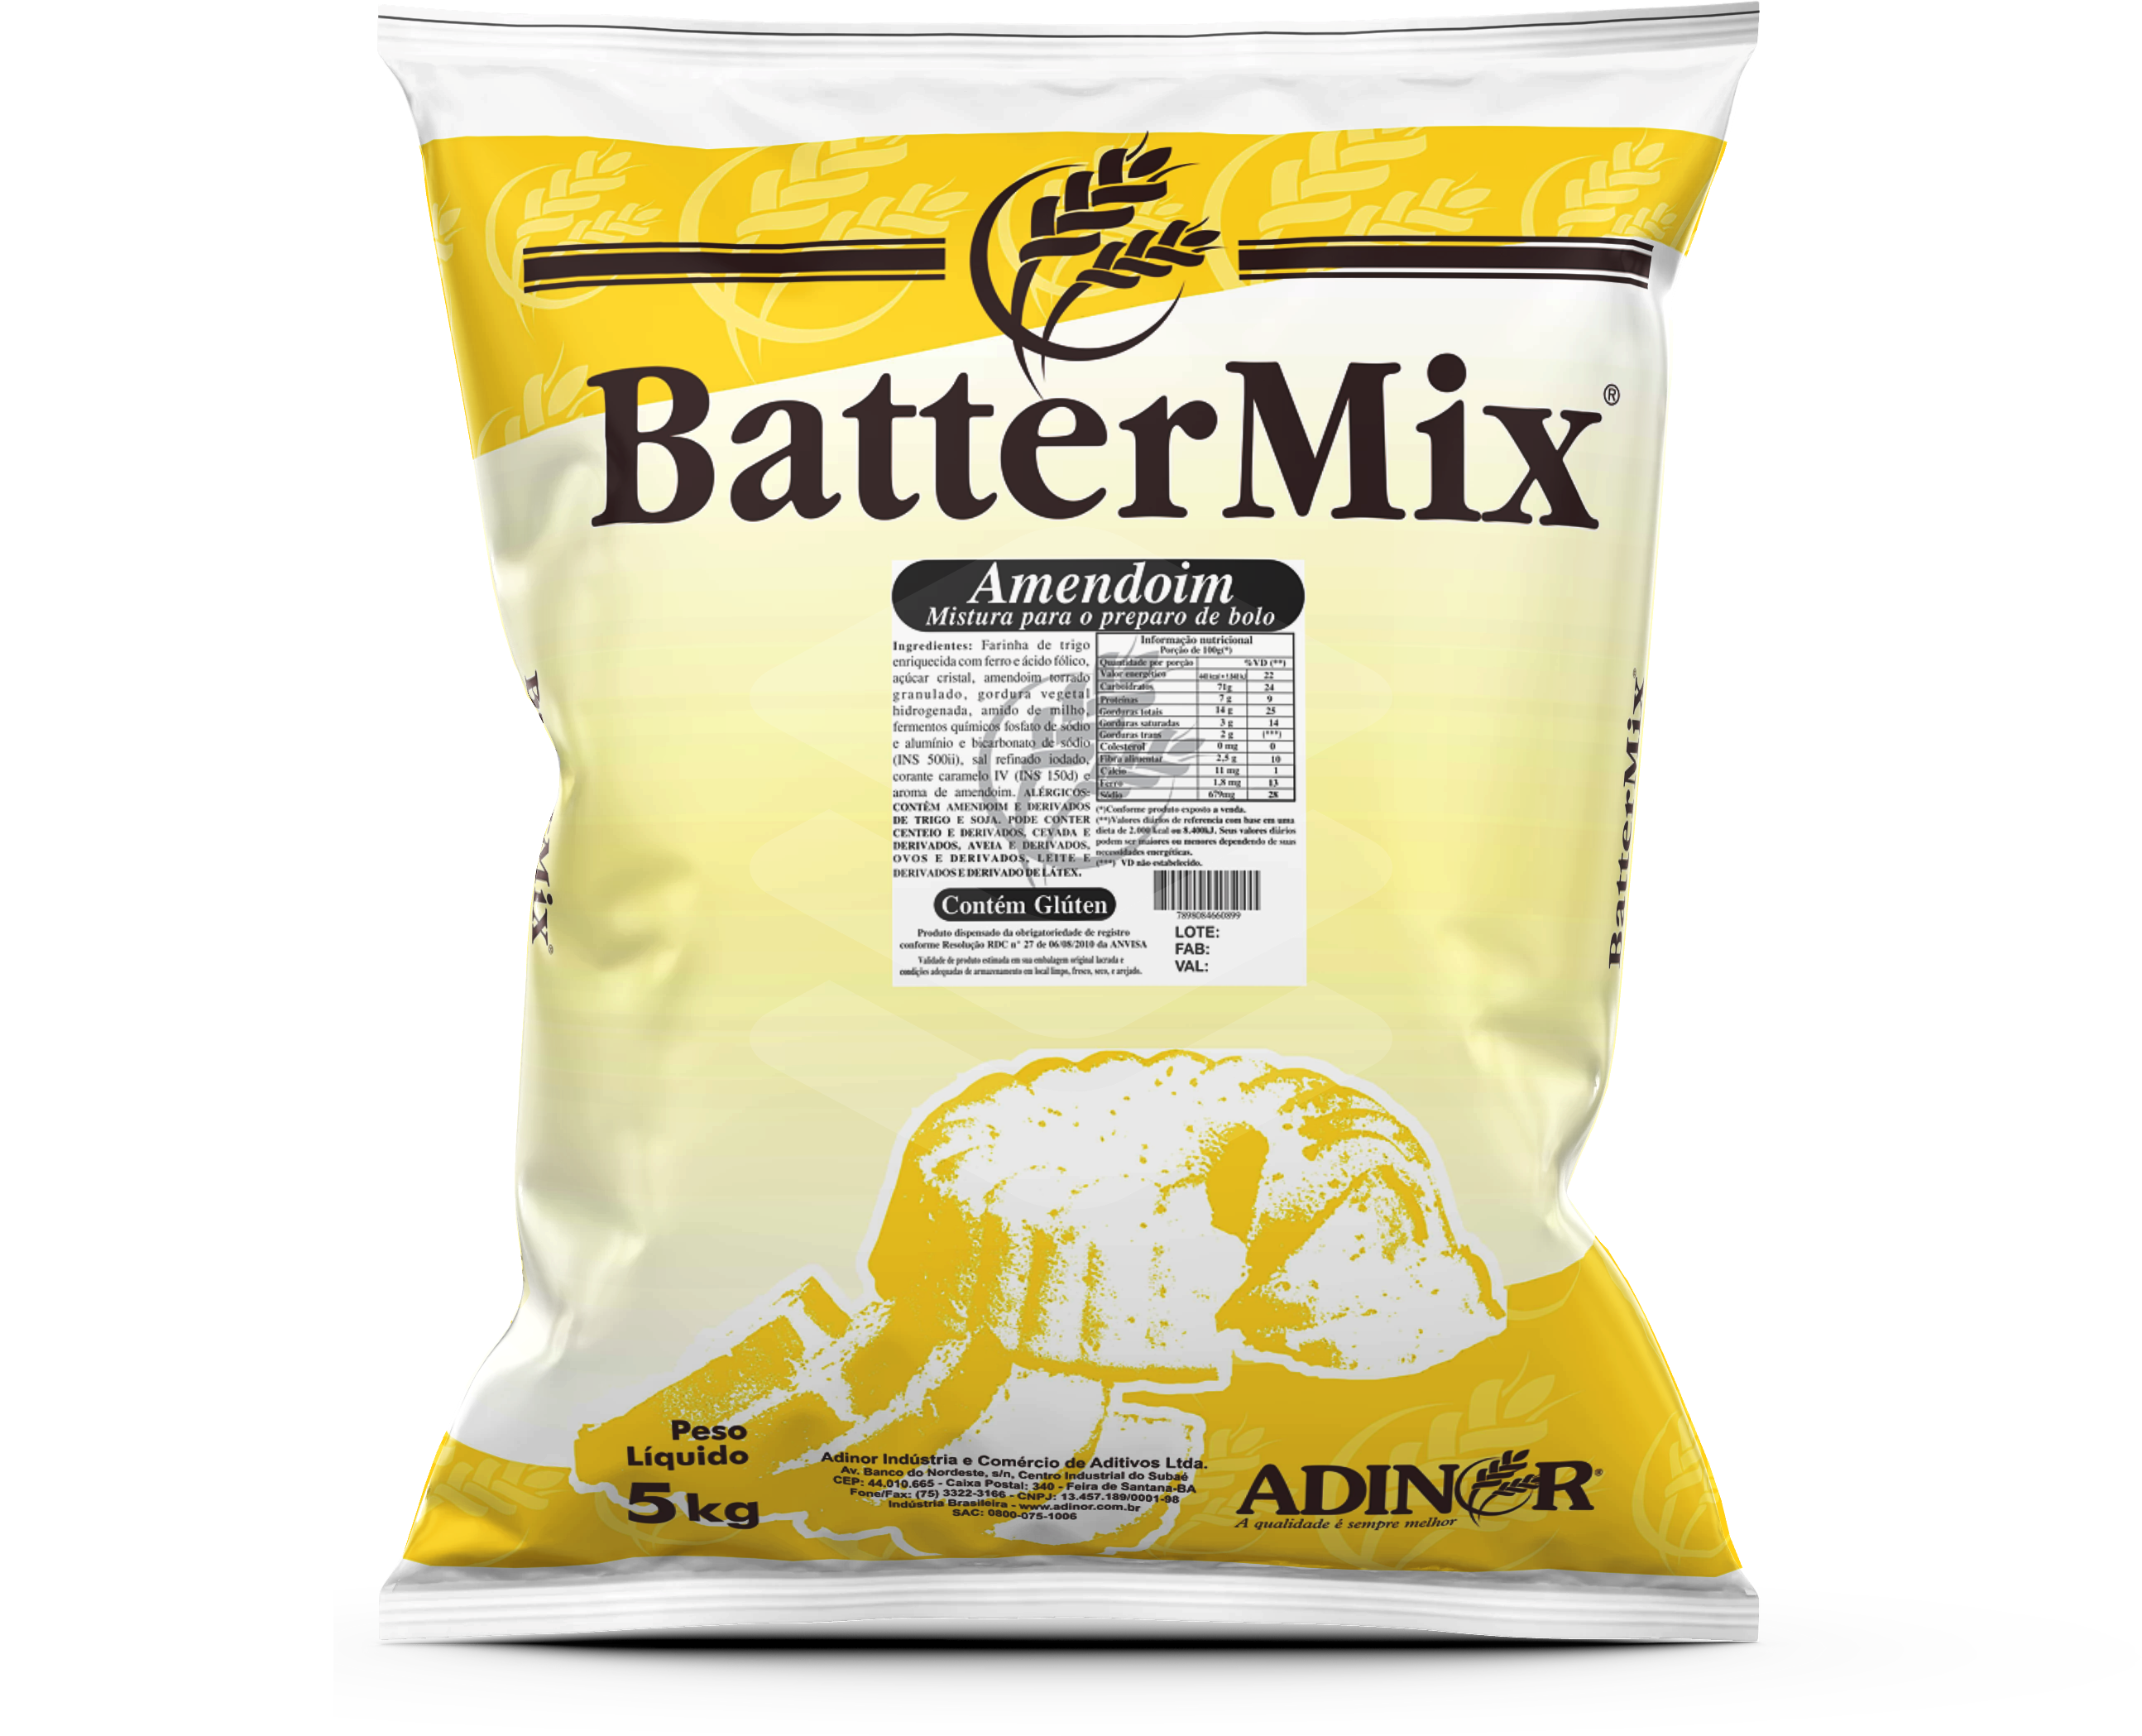 Battermix Amendoim